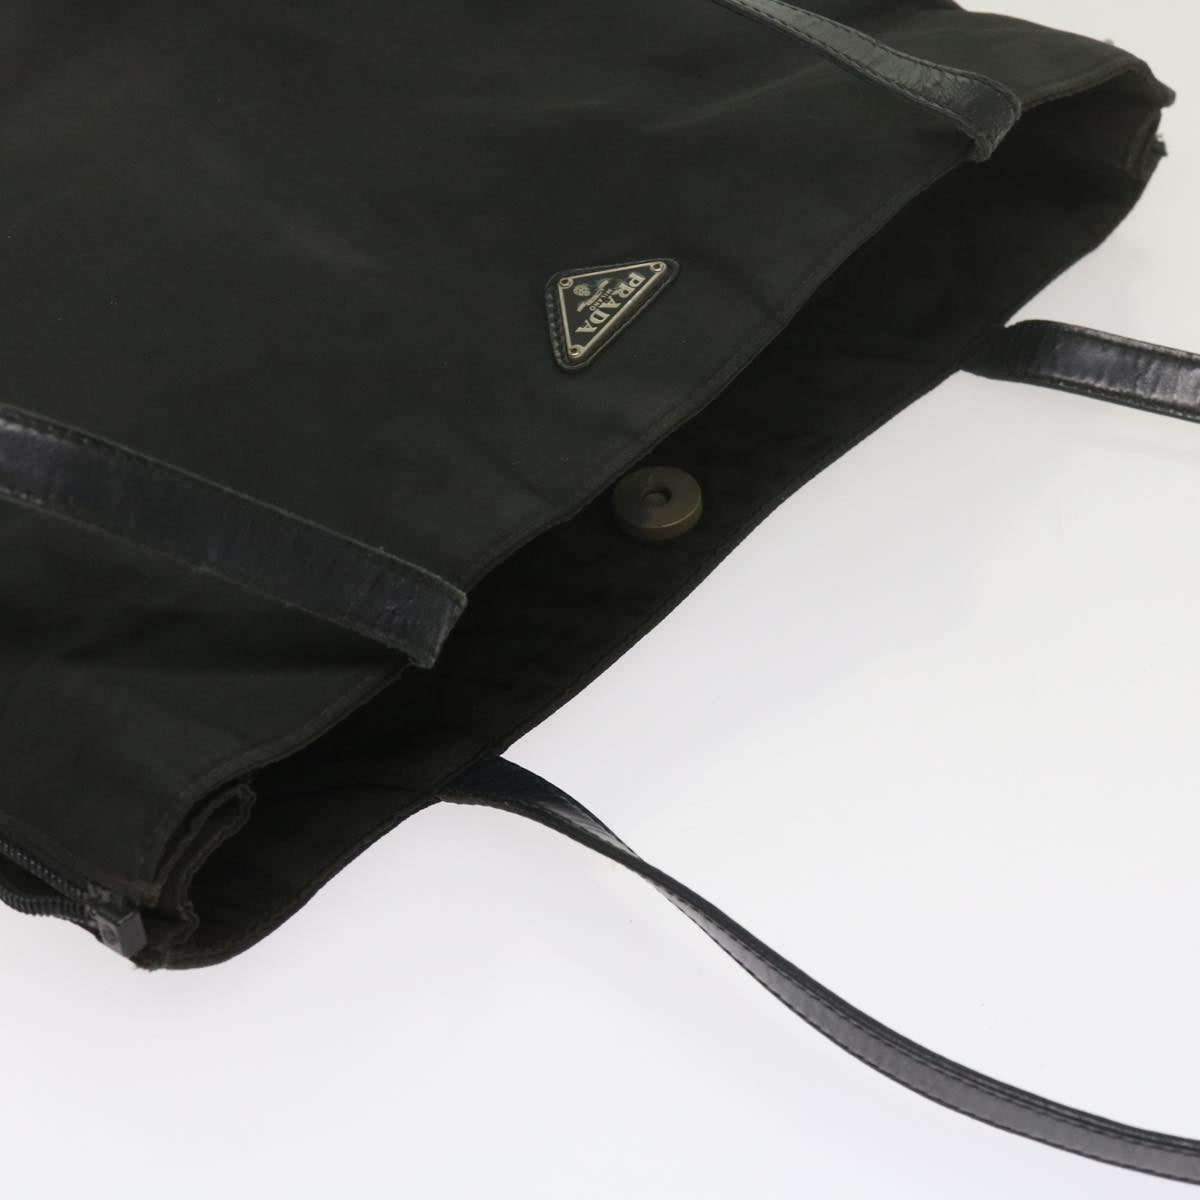 PRADA Tote Bag Nylon Black Auth 61707